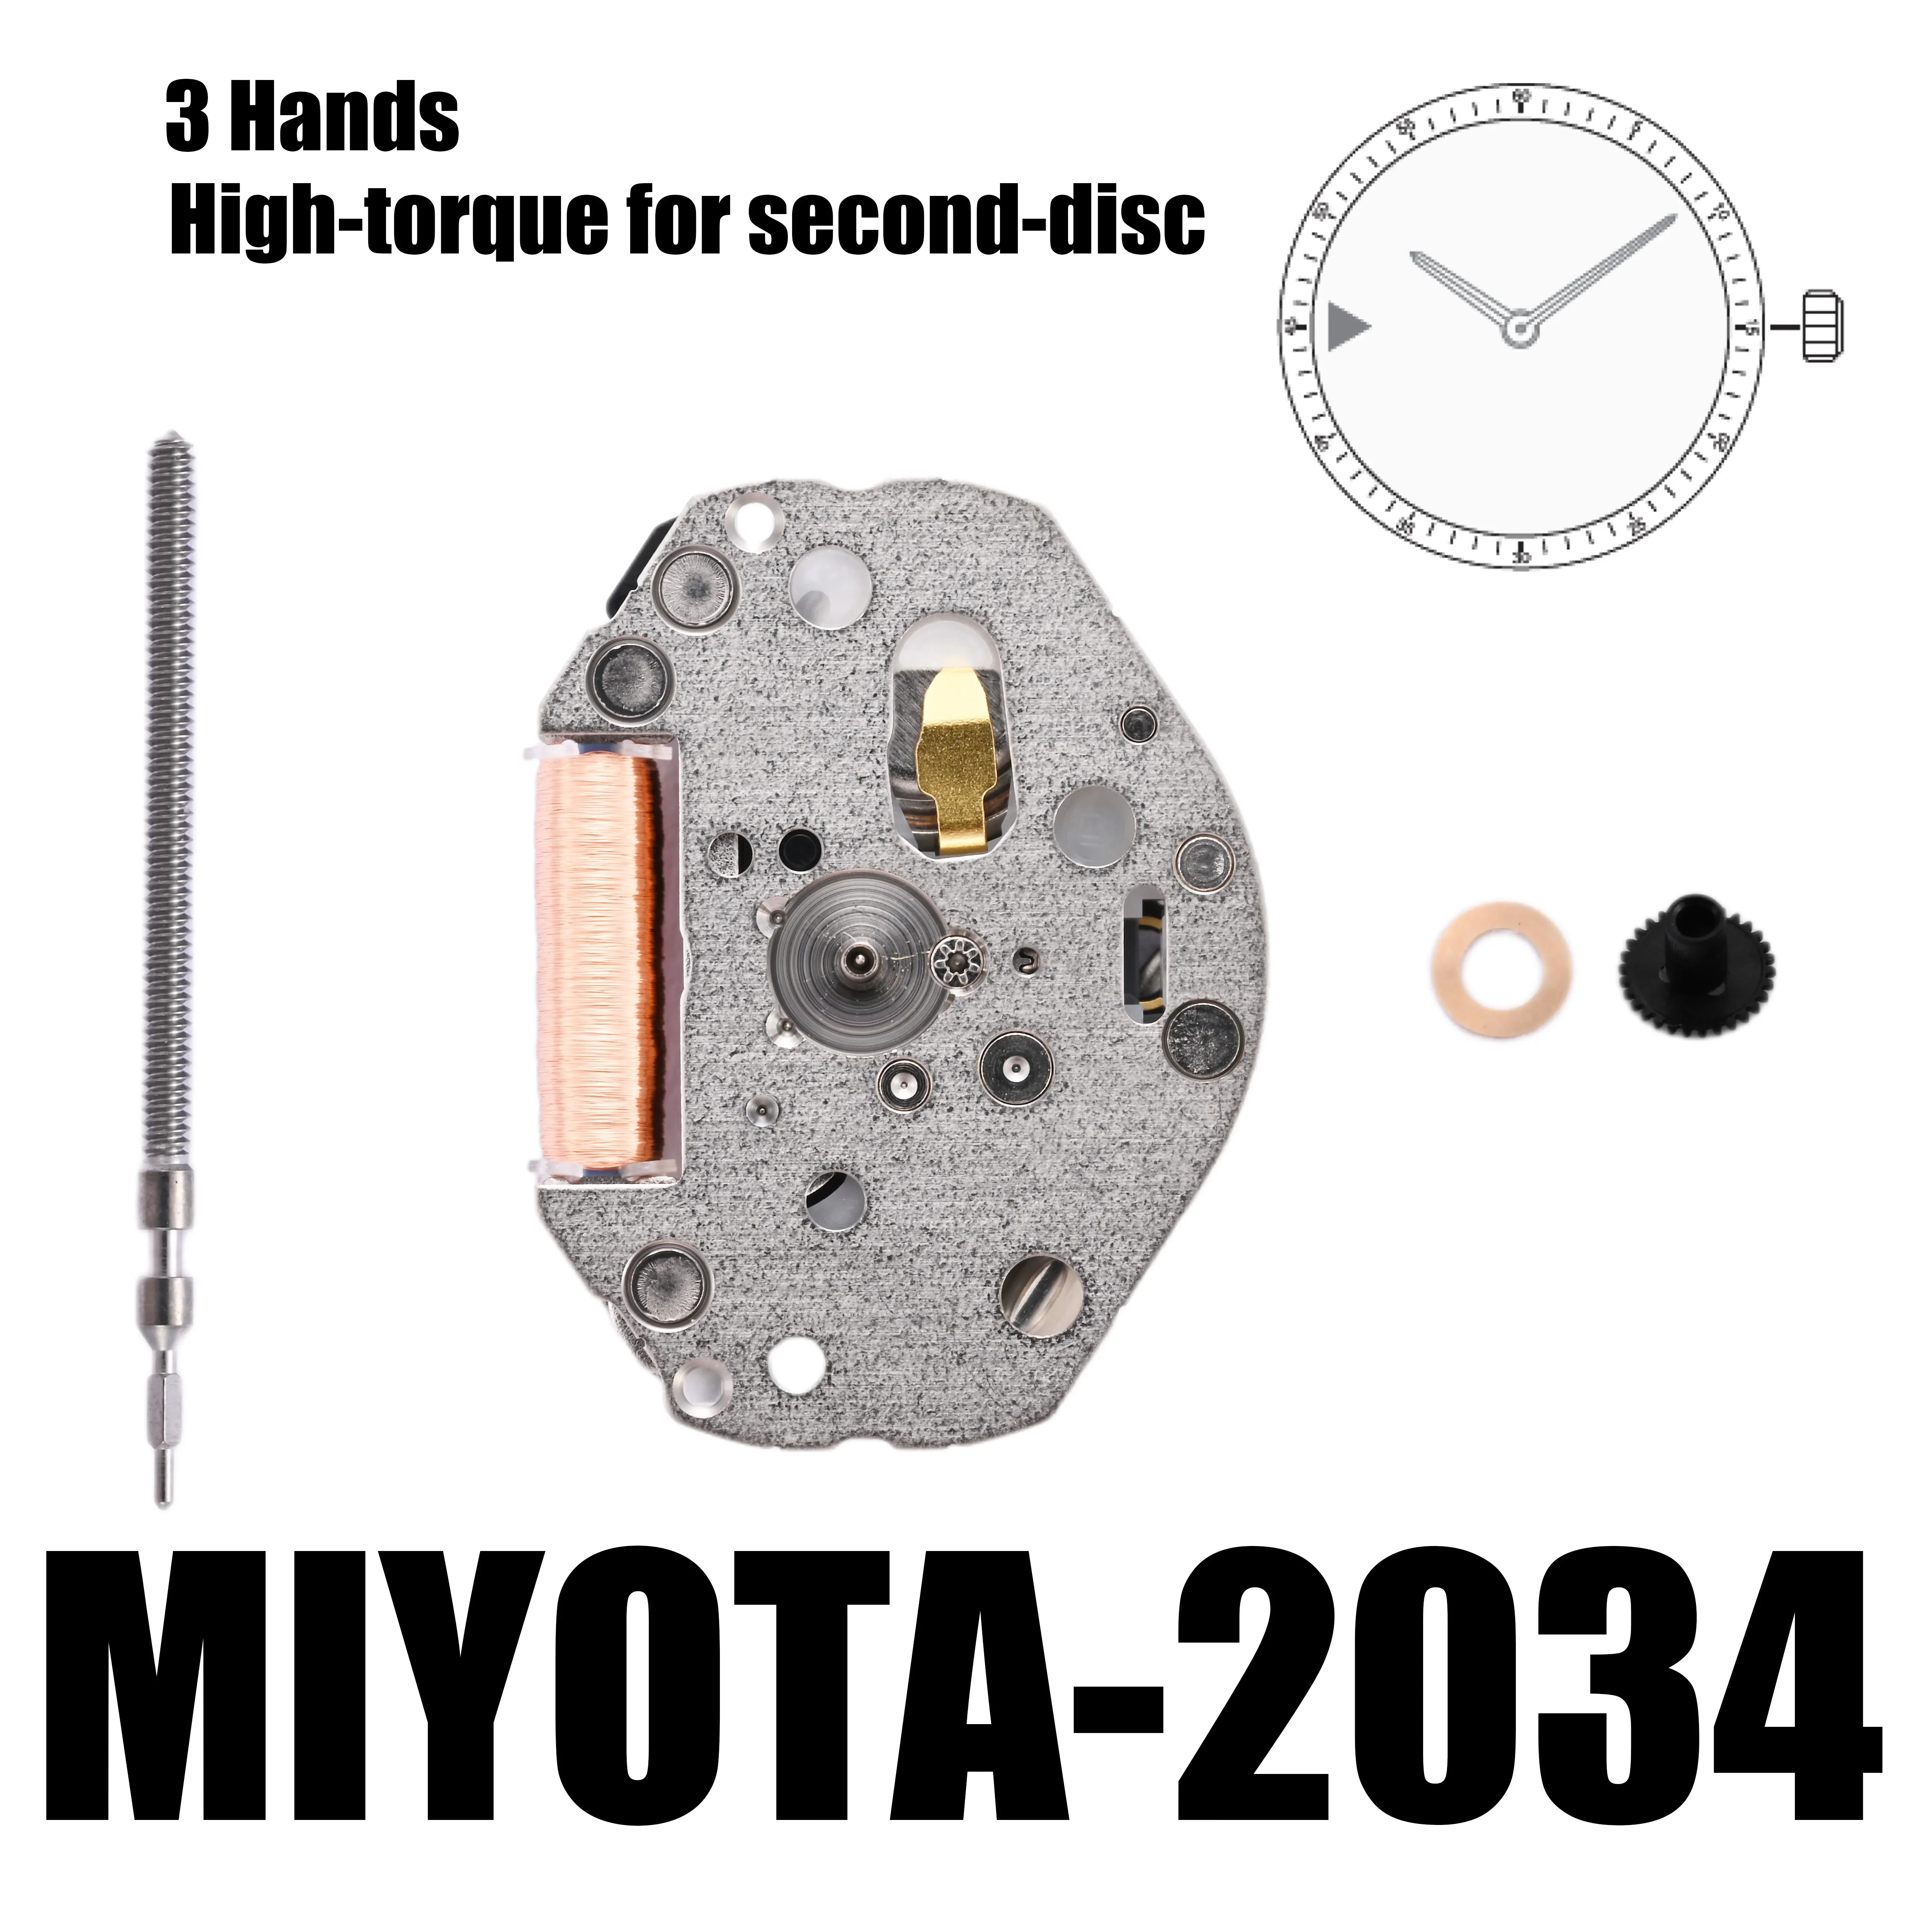 

MIYOTA 2034 Standard｜Movements Watch Movement Cal.2034, 3 Hands High-torque For Second-disc, Standard Movement.Size:6 3/4×8'''